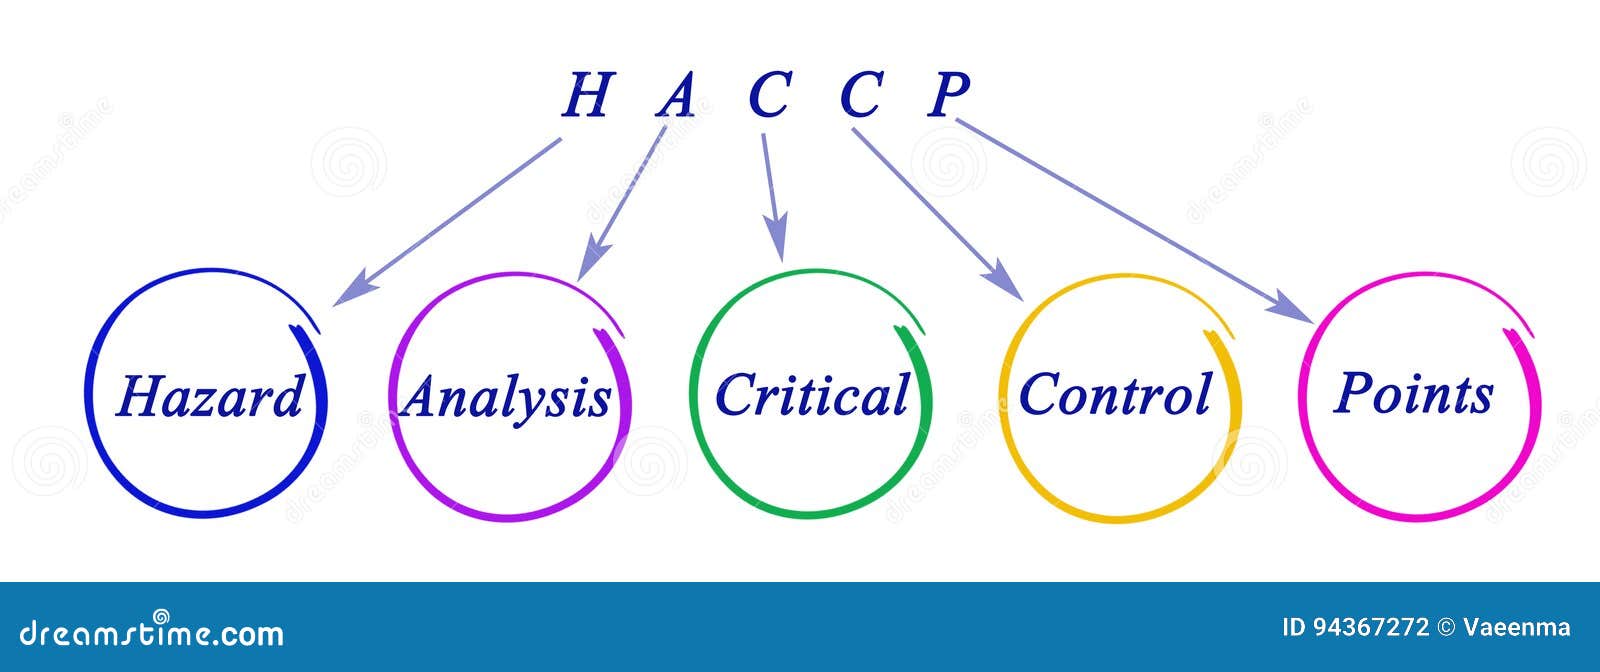 haccp regulatory requirements